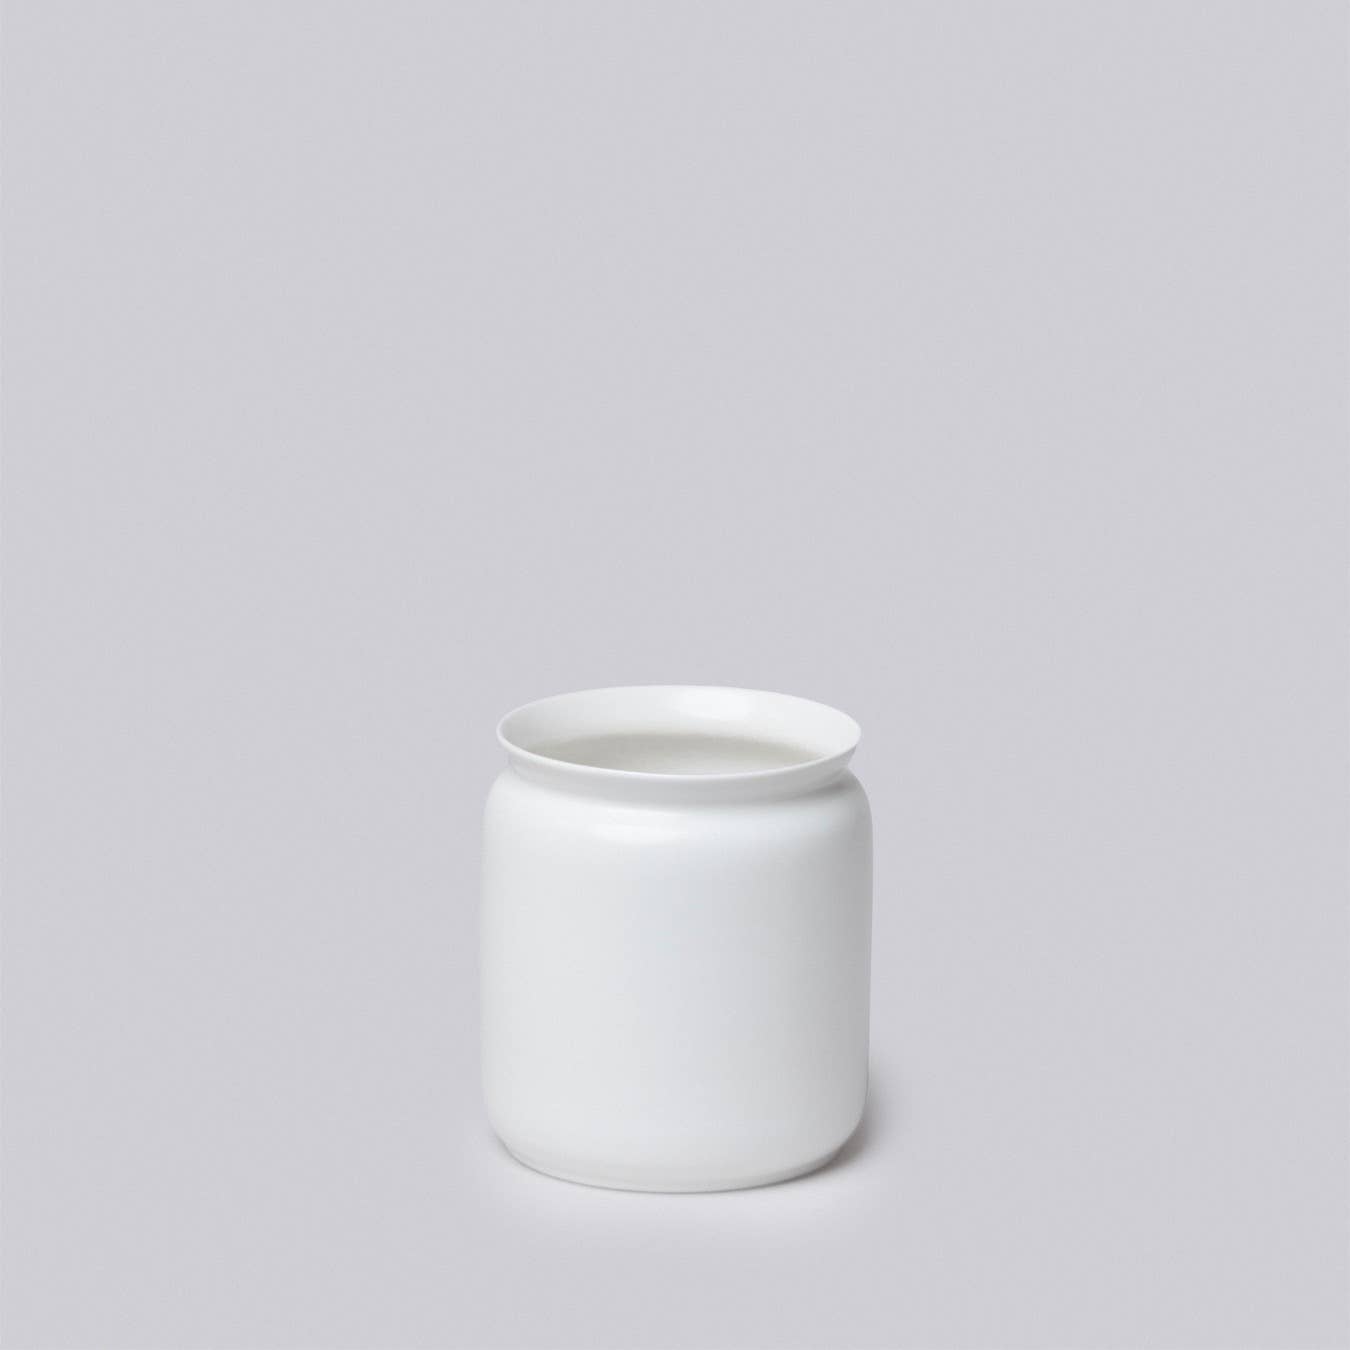 Middle Kingdom - Small Semi-Matte White Porcelain Vases